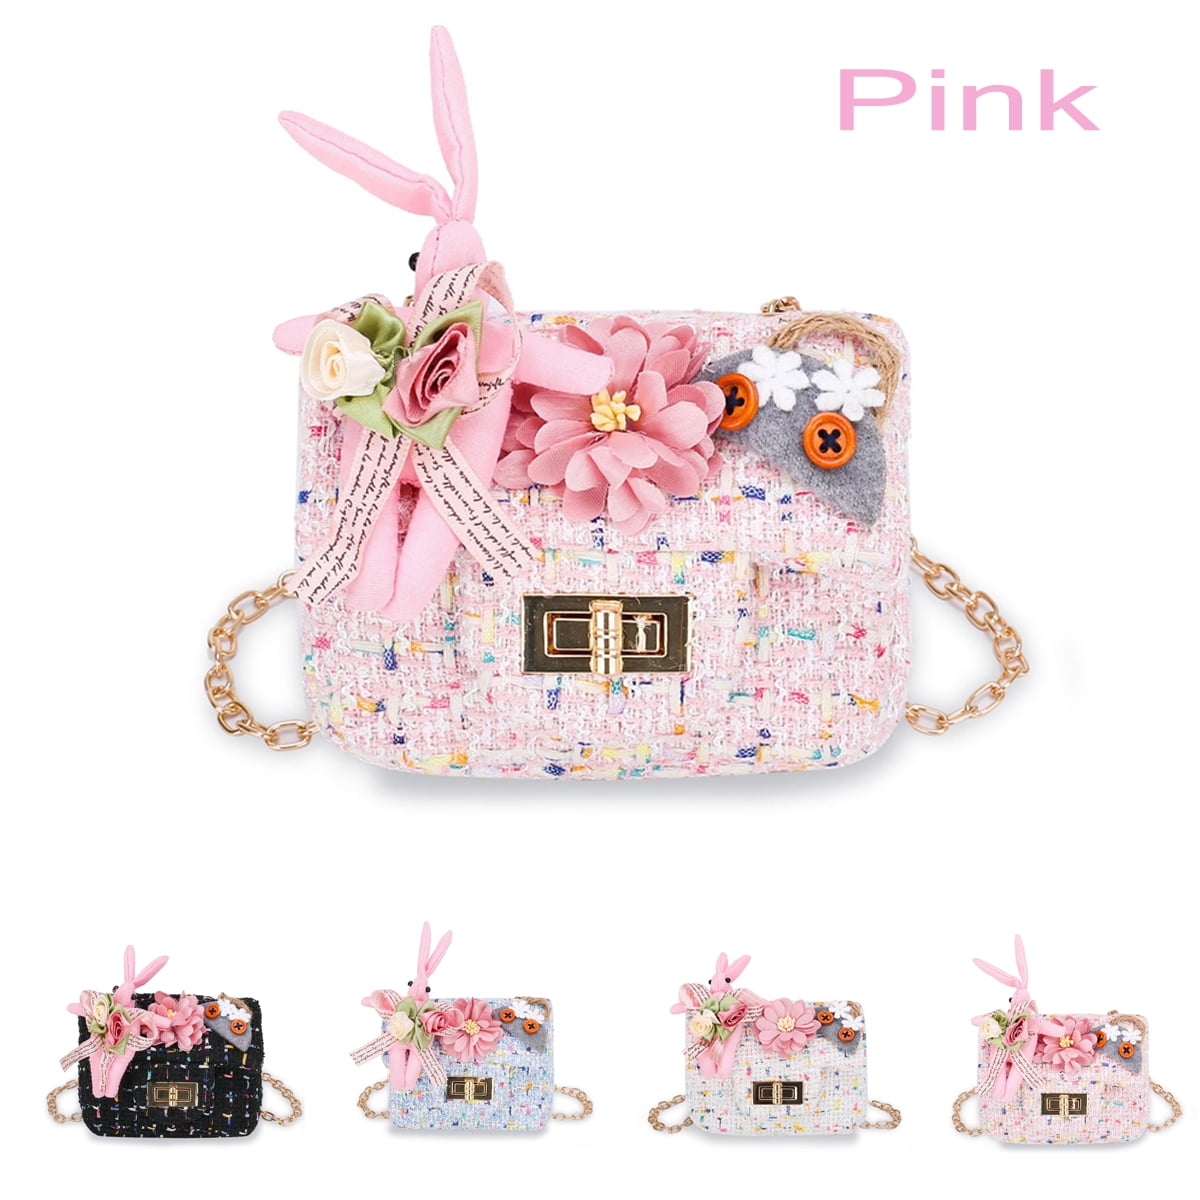 Small Fashion Purse for Little Girls Rabbit Toddler Kids Bag Cute Little Girls Handbags Pink 13f330d6 e08e 4808 9044 84f673e575c6.7f47aa720e0d4a3702215c37ddcb7b15